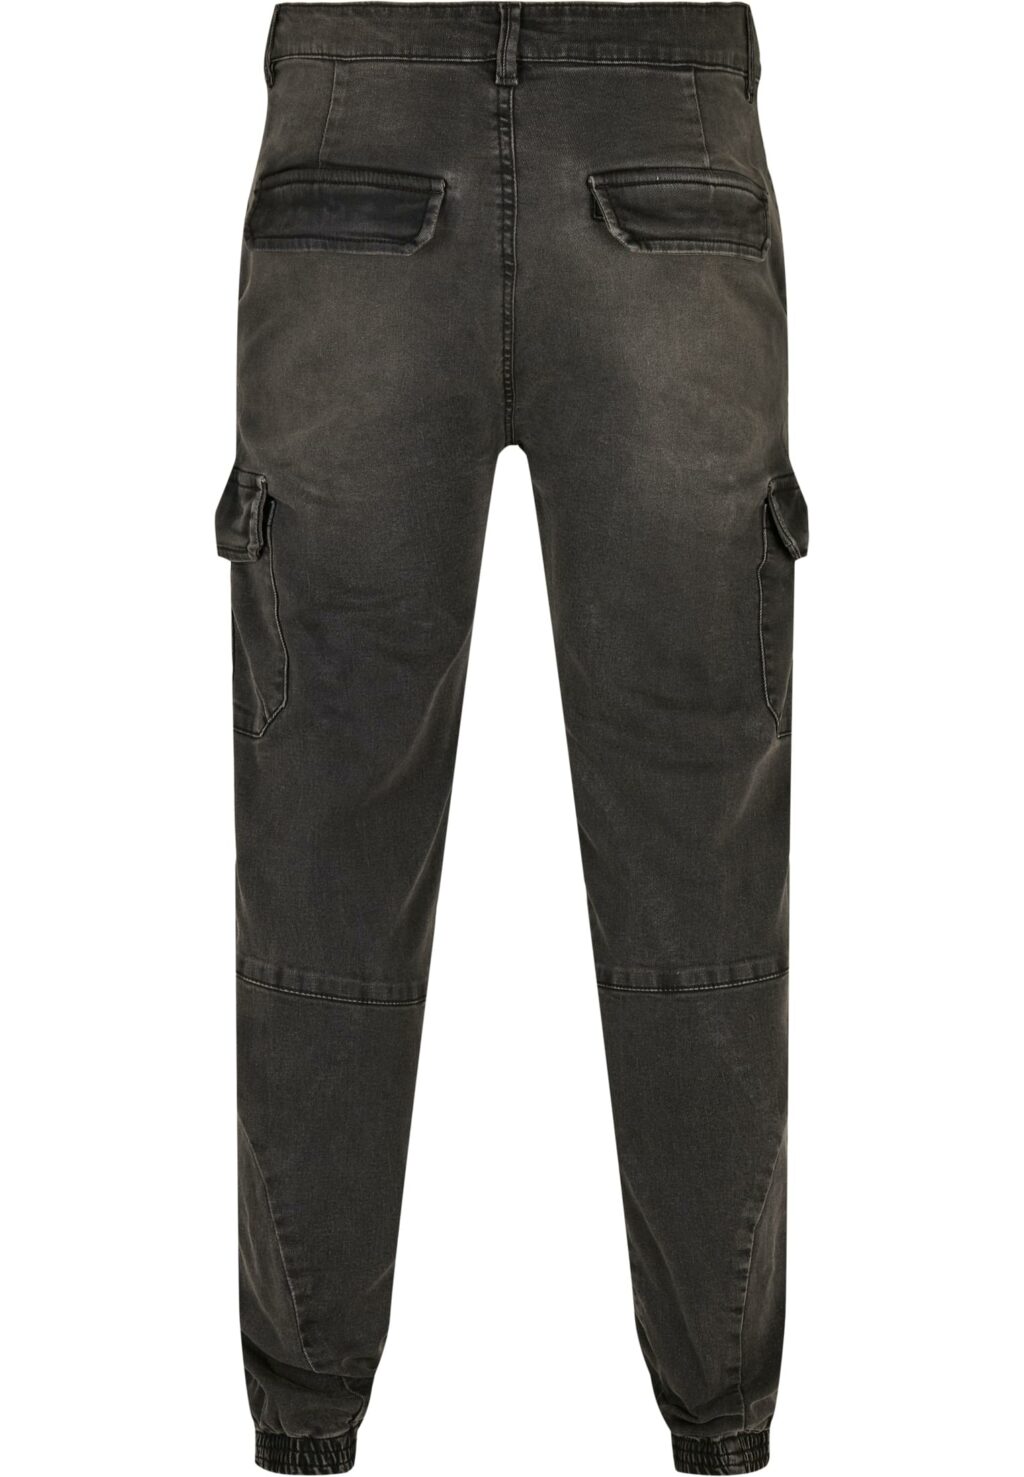 Urban Classics Denim Cargo Jogging Pants real black washed TB4662